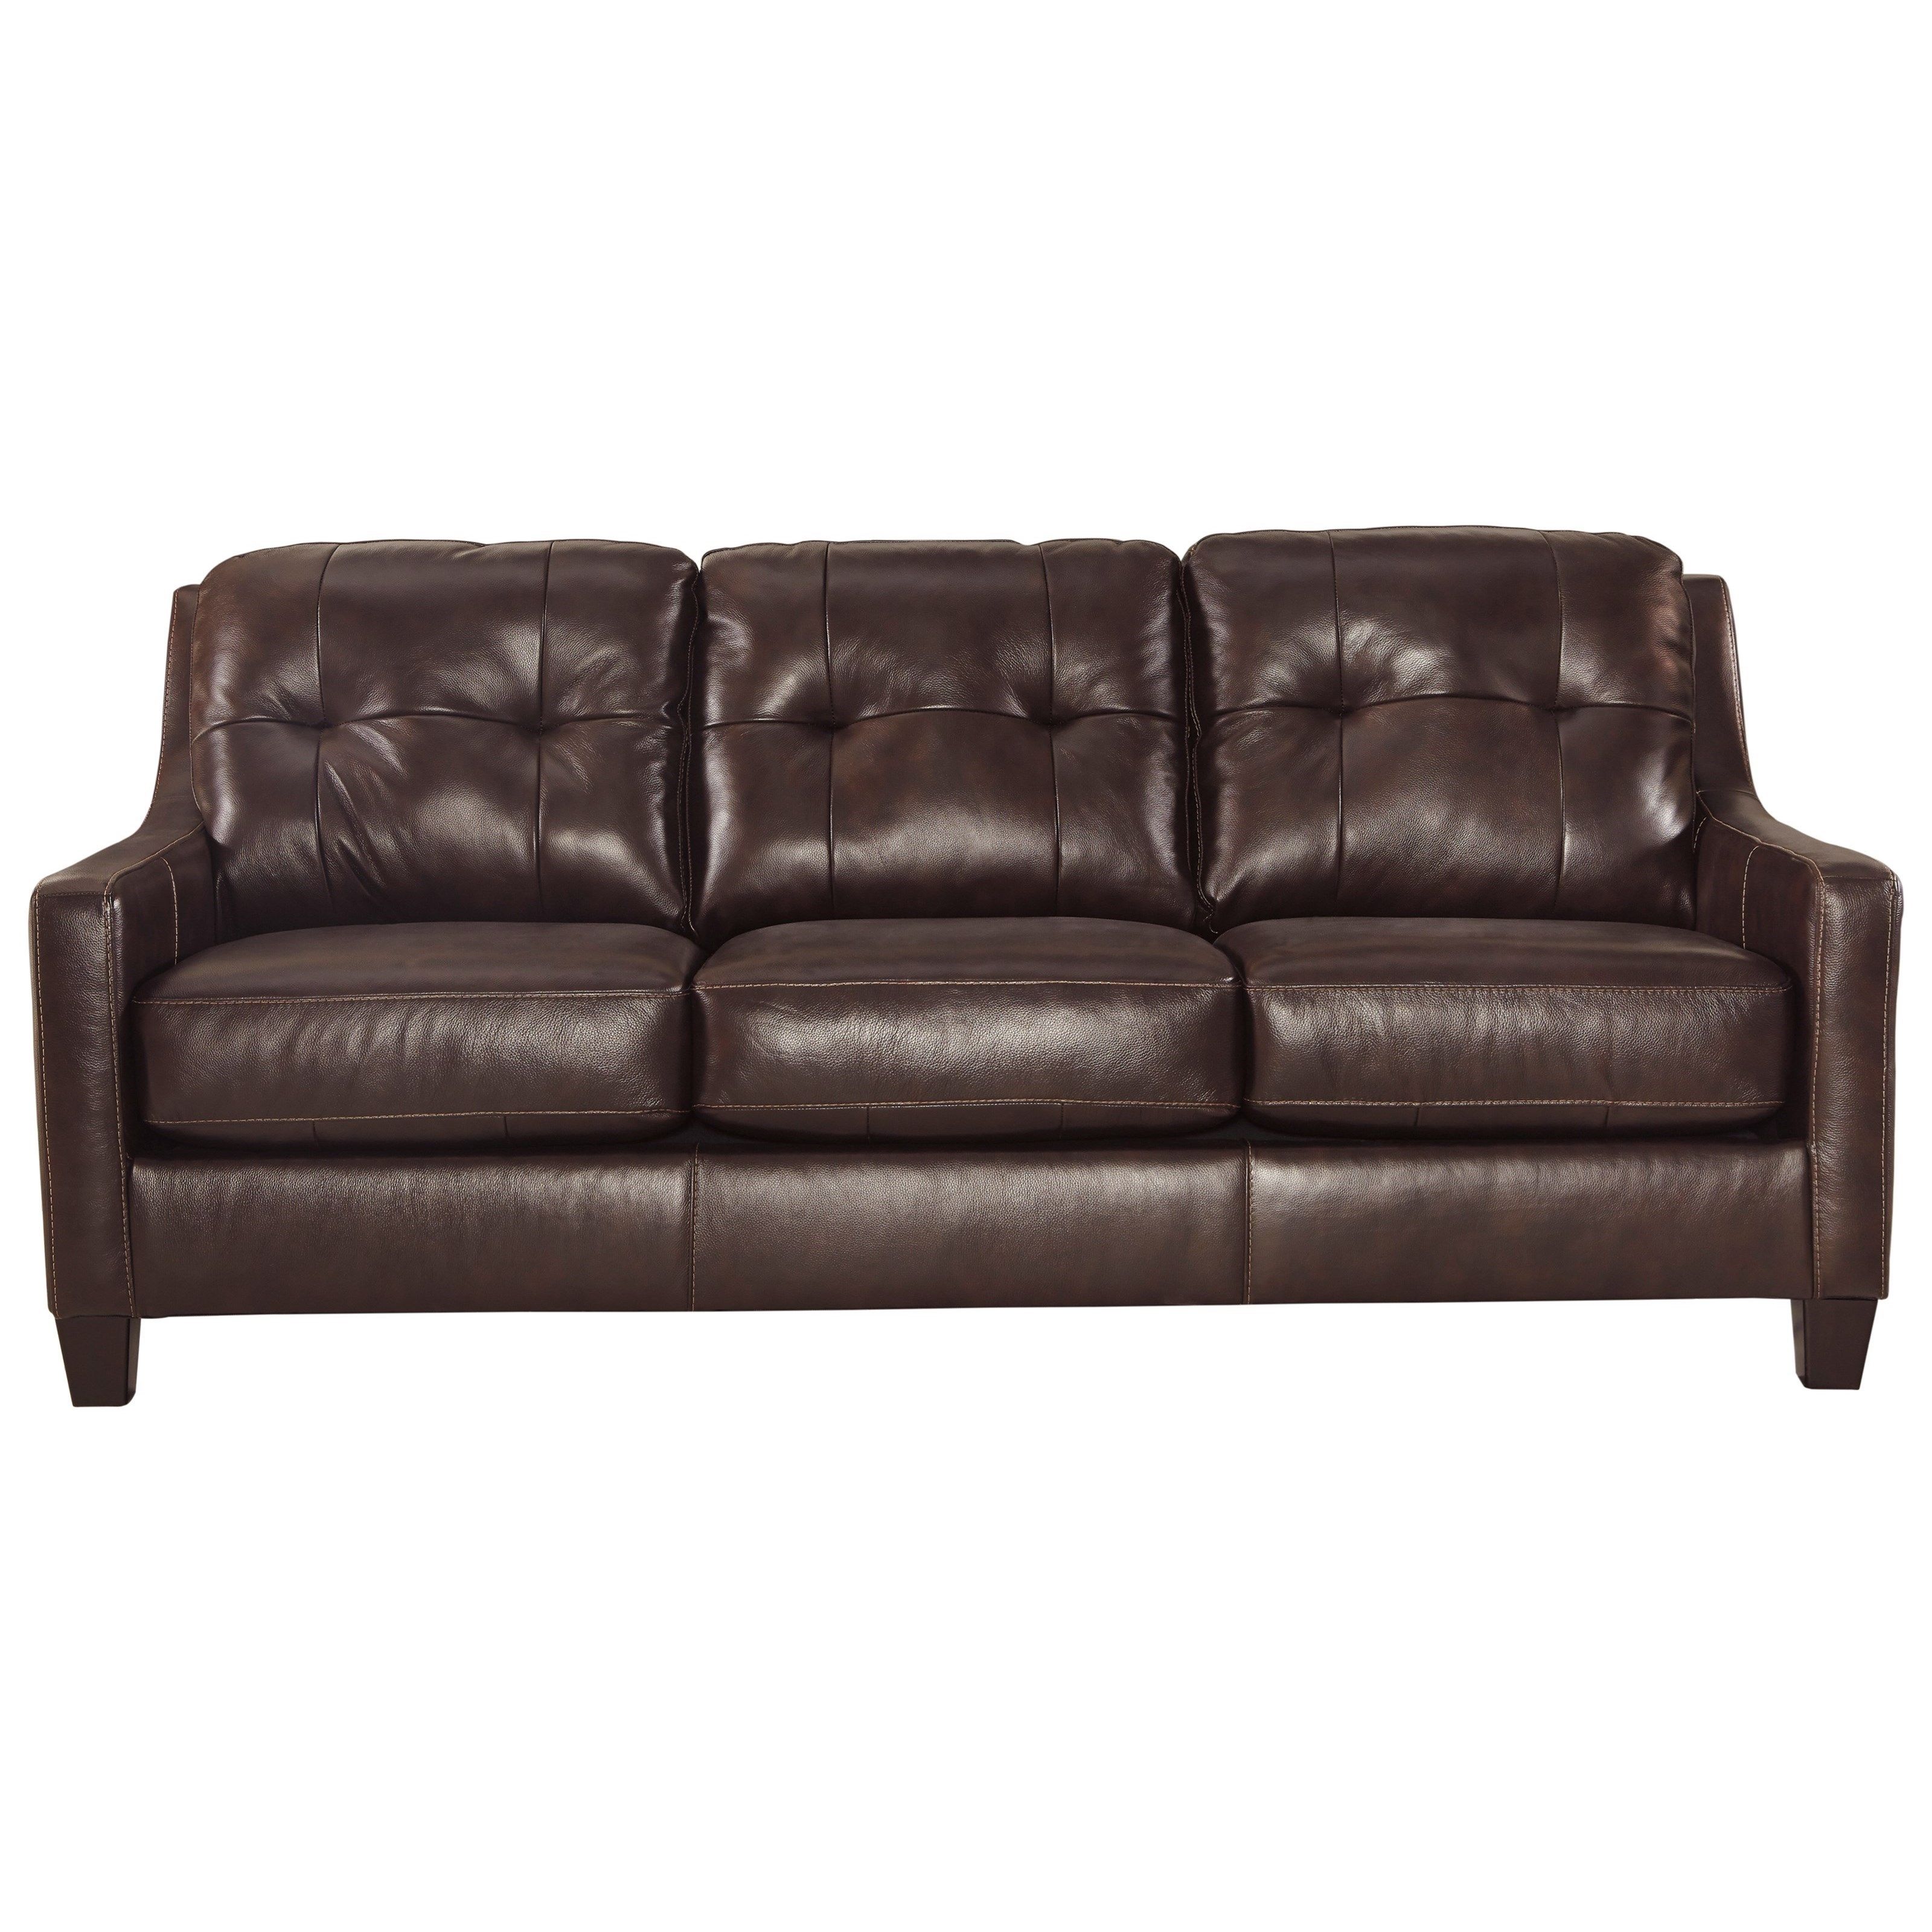 Signature Designashley O'kean Contemporary Leather Match Sofa Regarding Ashley Tufted Sofas (View 7 of 10)